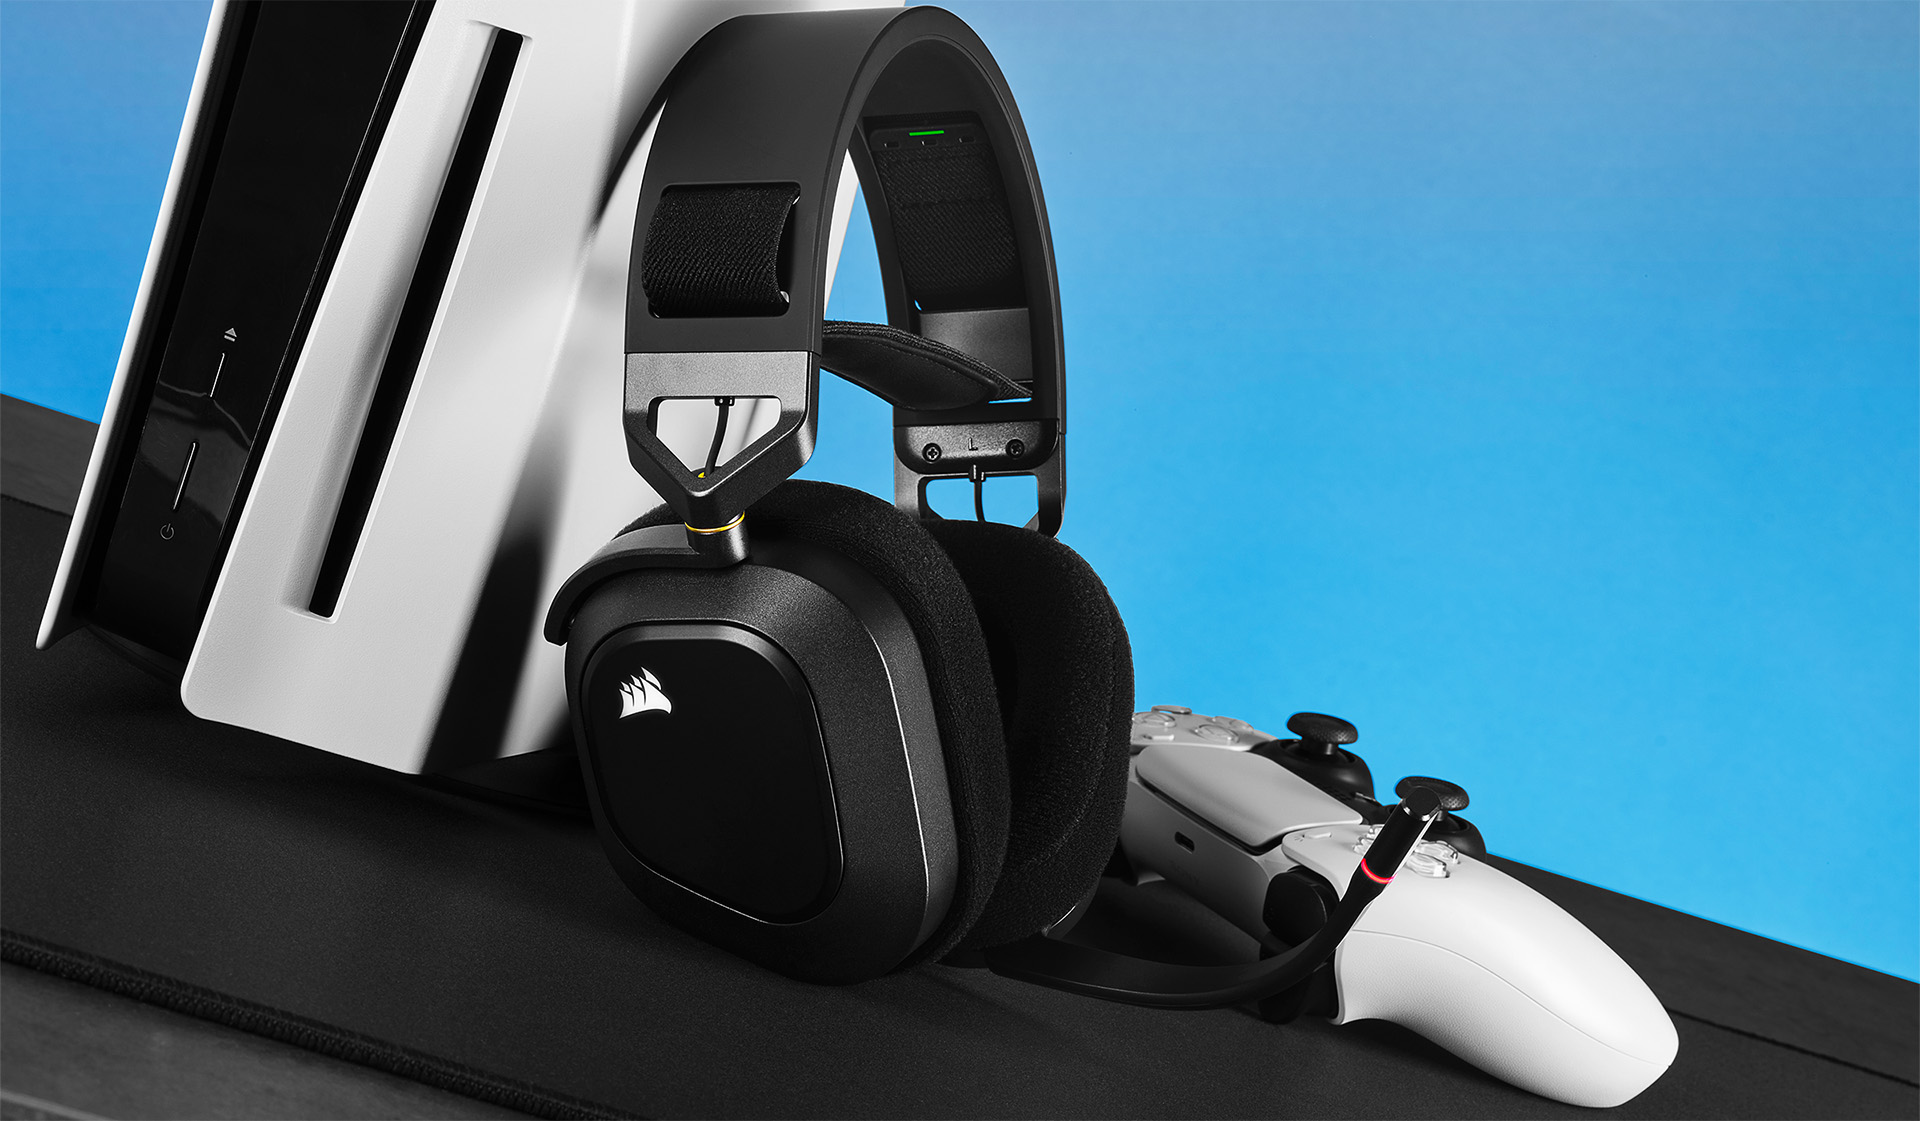 ballade Sætte forsinke Review: Corsair HS80 RGB Gaming Headset - Peripherals - HEXUS.net